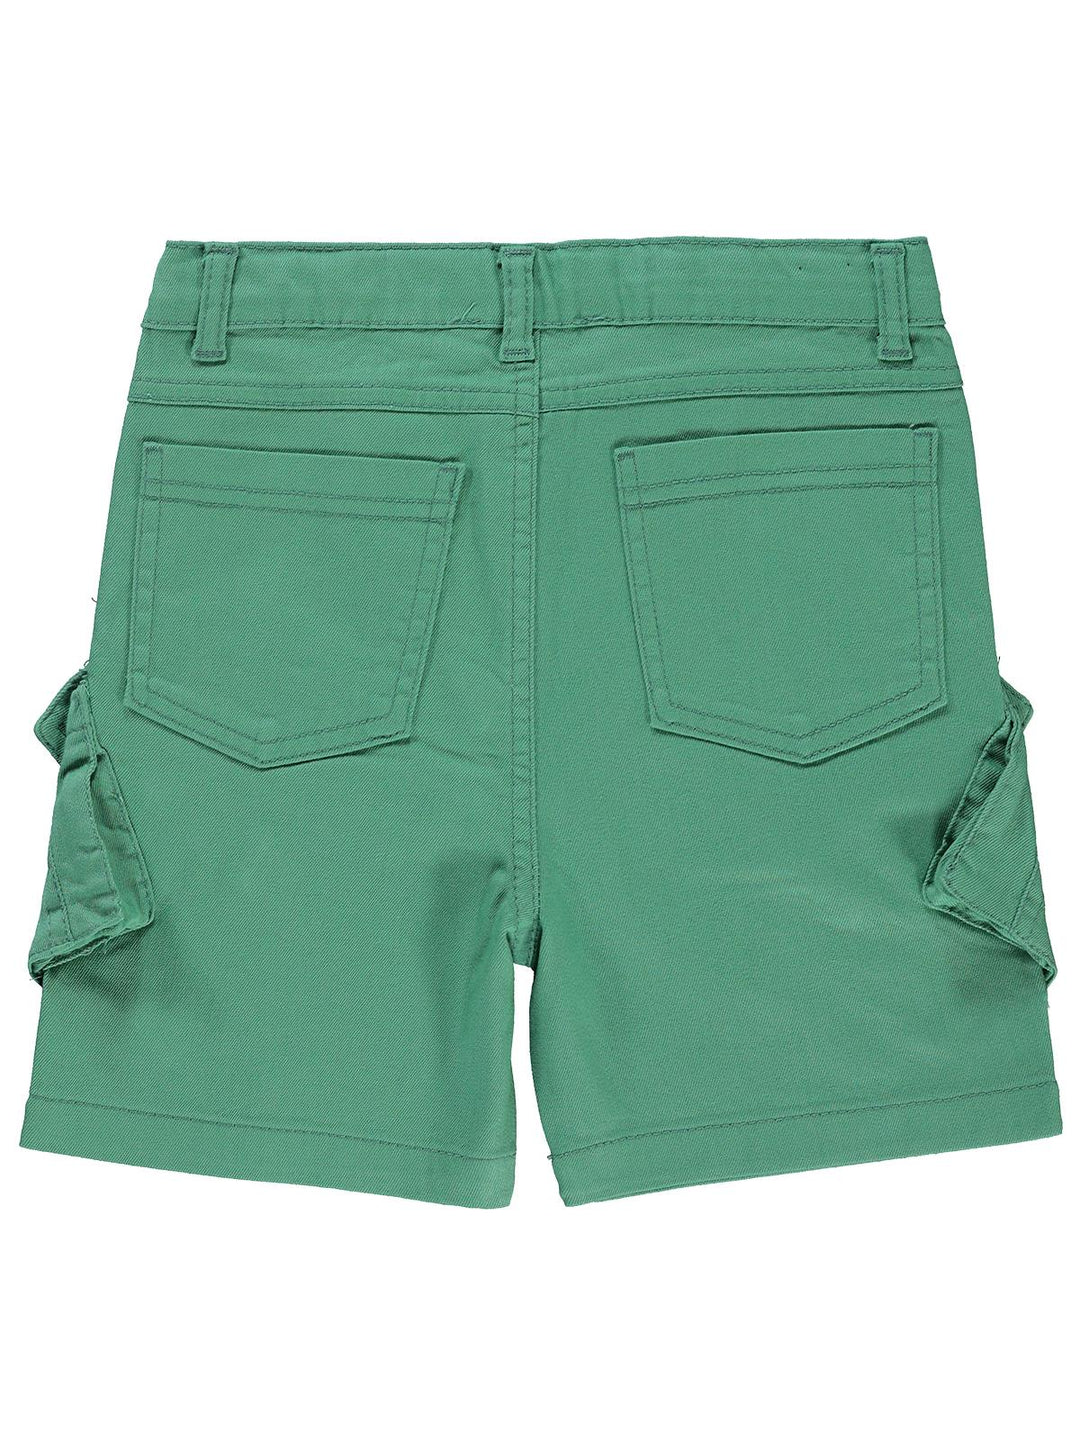 Civil Boys Cotton Shorts #4802-2 (S-22)